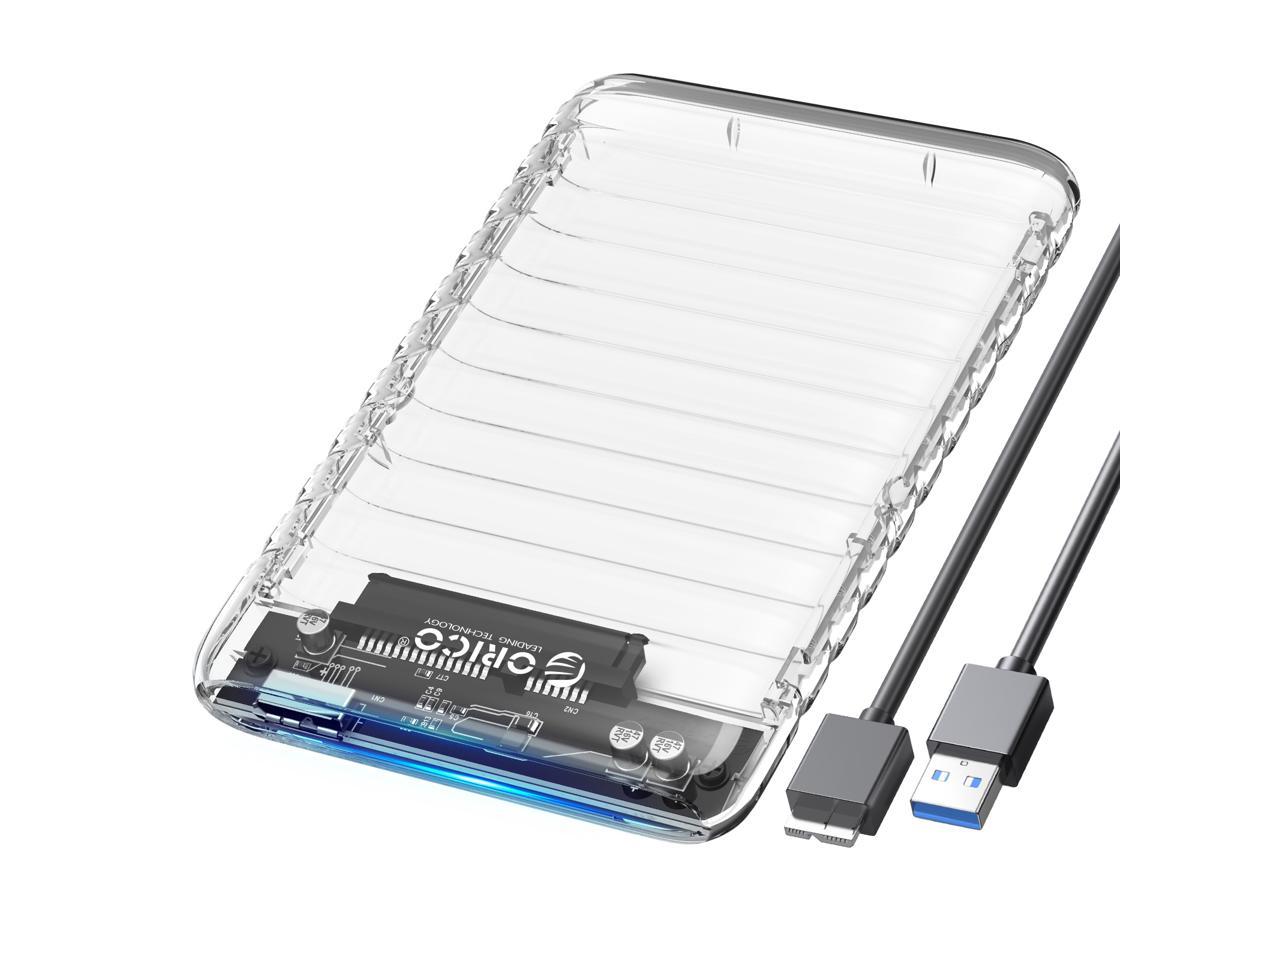 ORICO 2.5" USB 3.0 to SATA 3.0 External Hard Drive Disk Enclosure Box, USB 3.0 Case for 2.5" HDD / SSD, Support UASP Protocol SATA III Tool Free [Upgrade